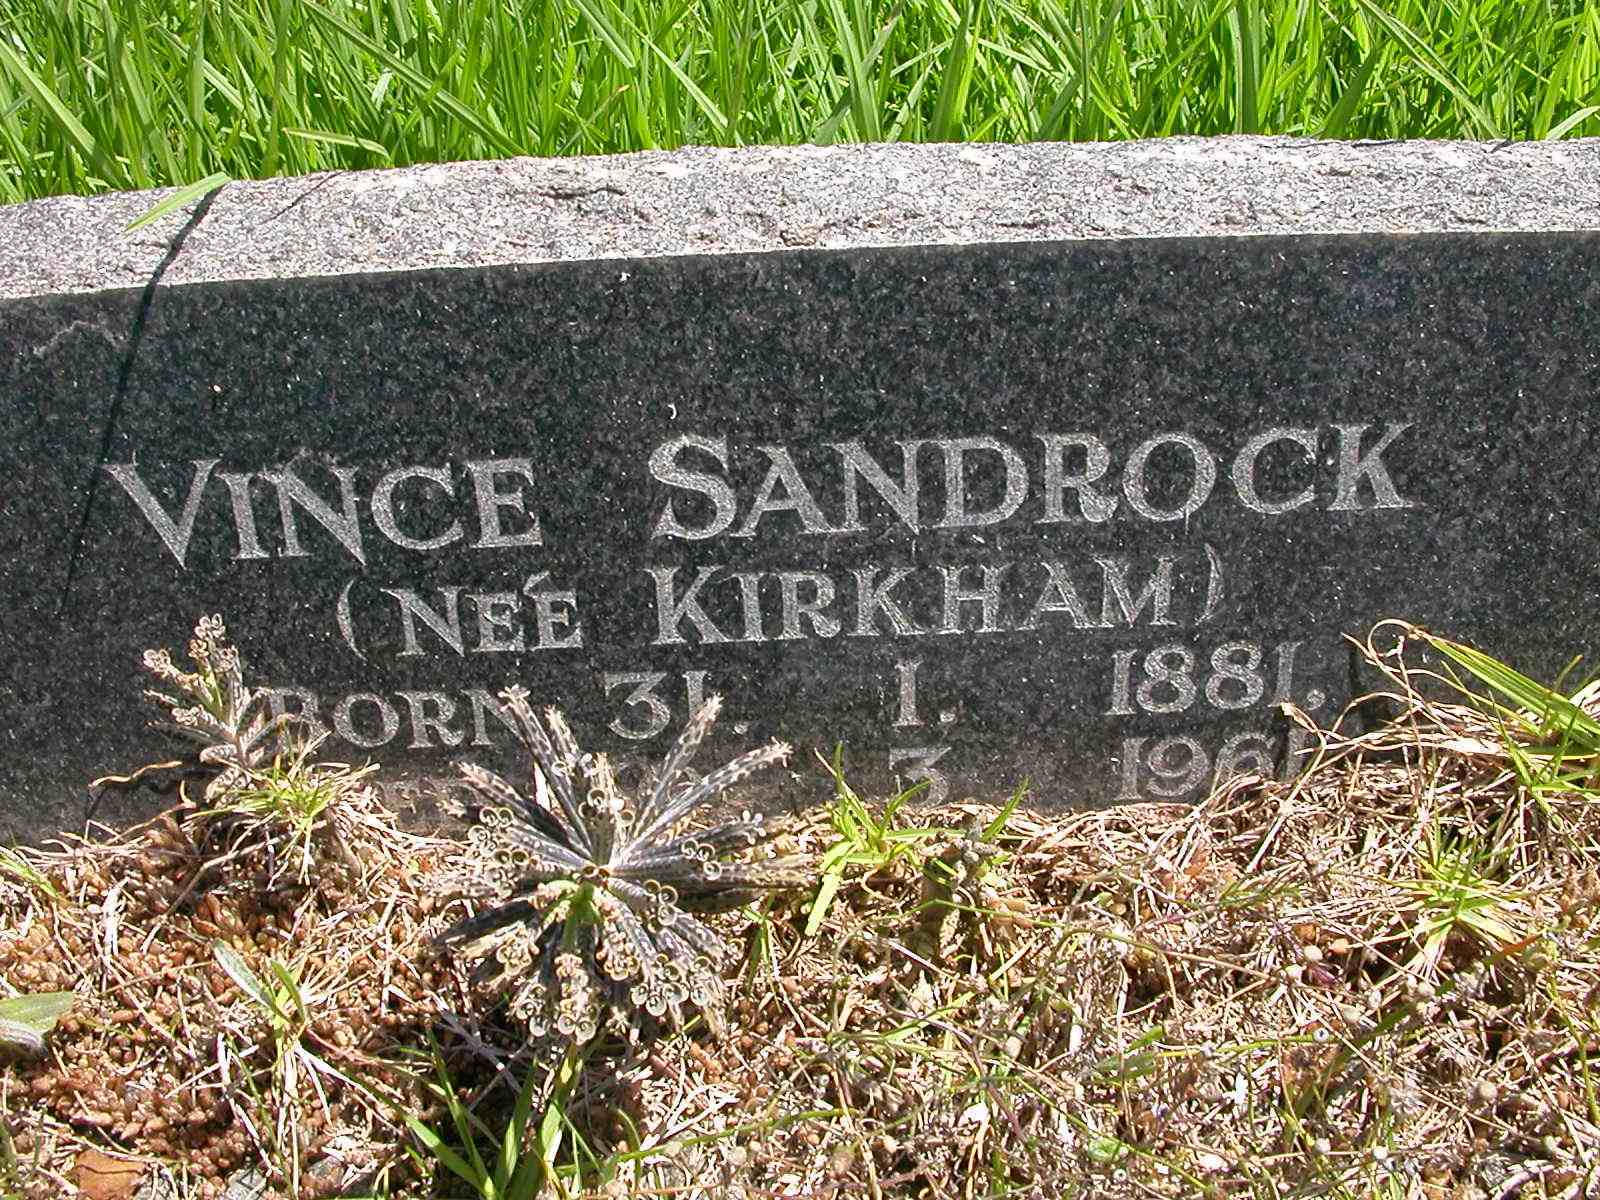 SANDROCK Vince nee KIRKHAM 1881-1961